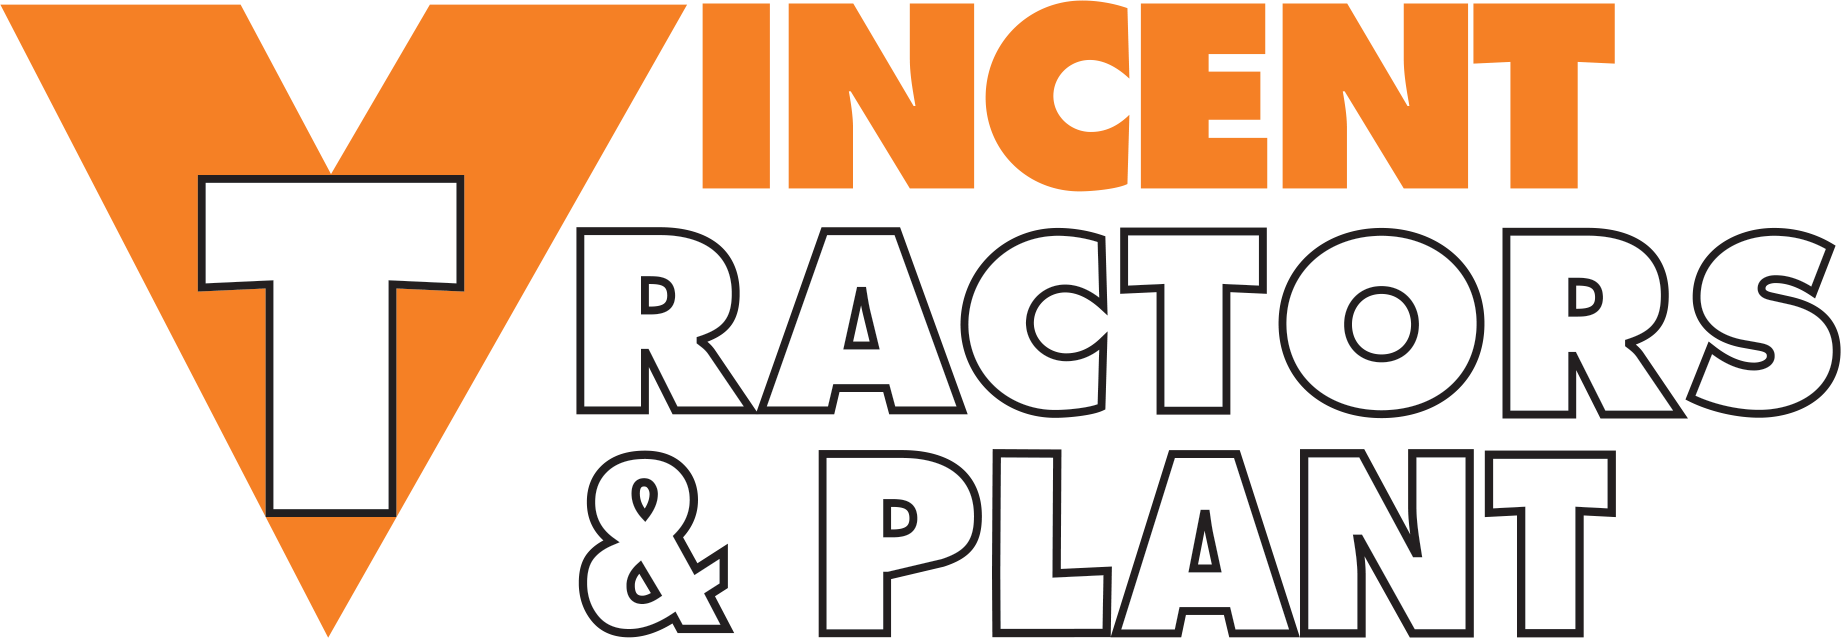 Company logo for 'Vincent Tractors & Plant'.